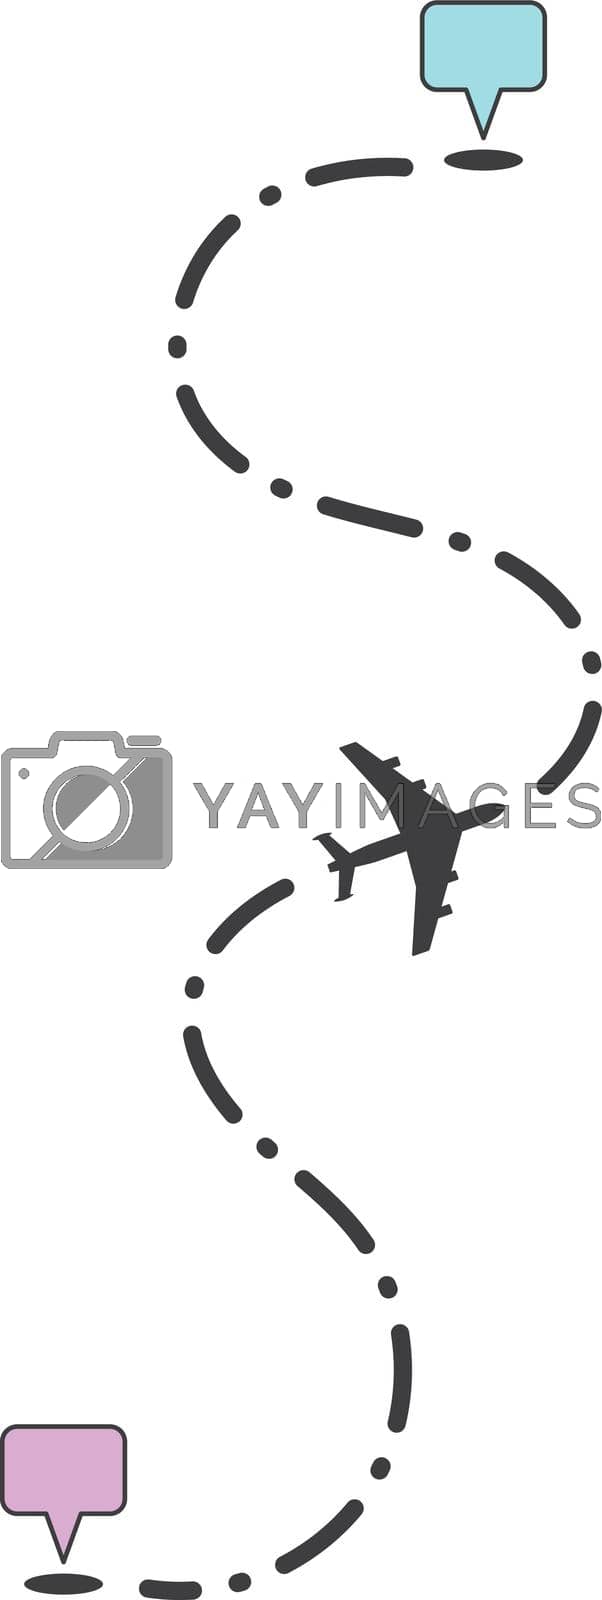 Royalty free image of Plane track. Flight plan lines. Airplane path by LadadikArt